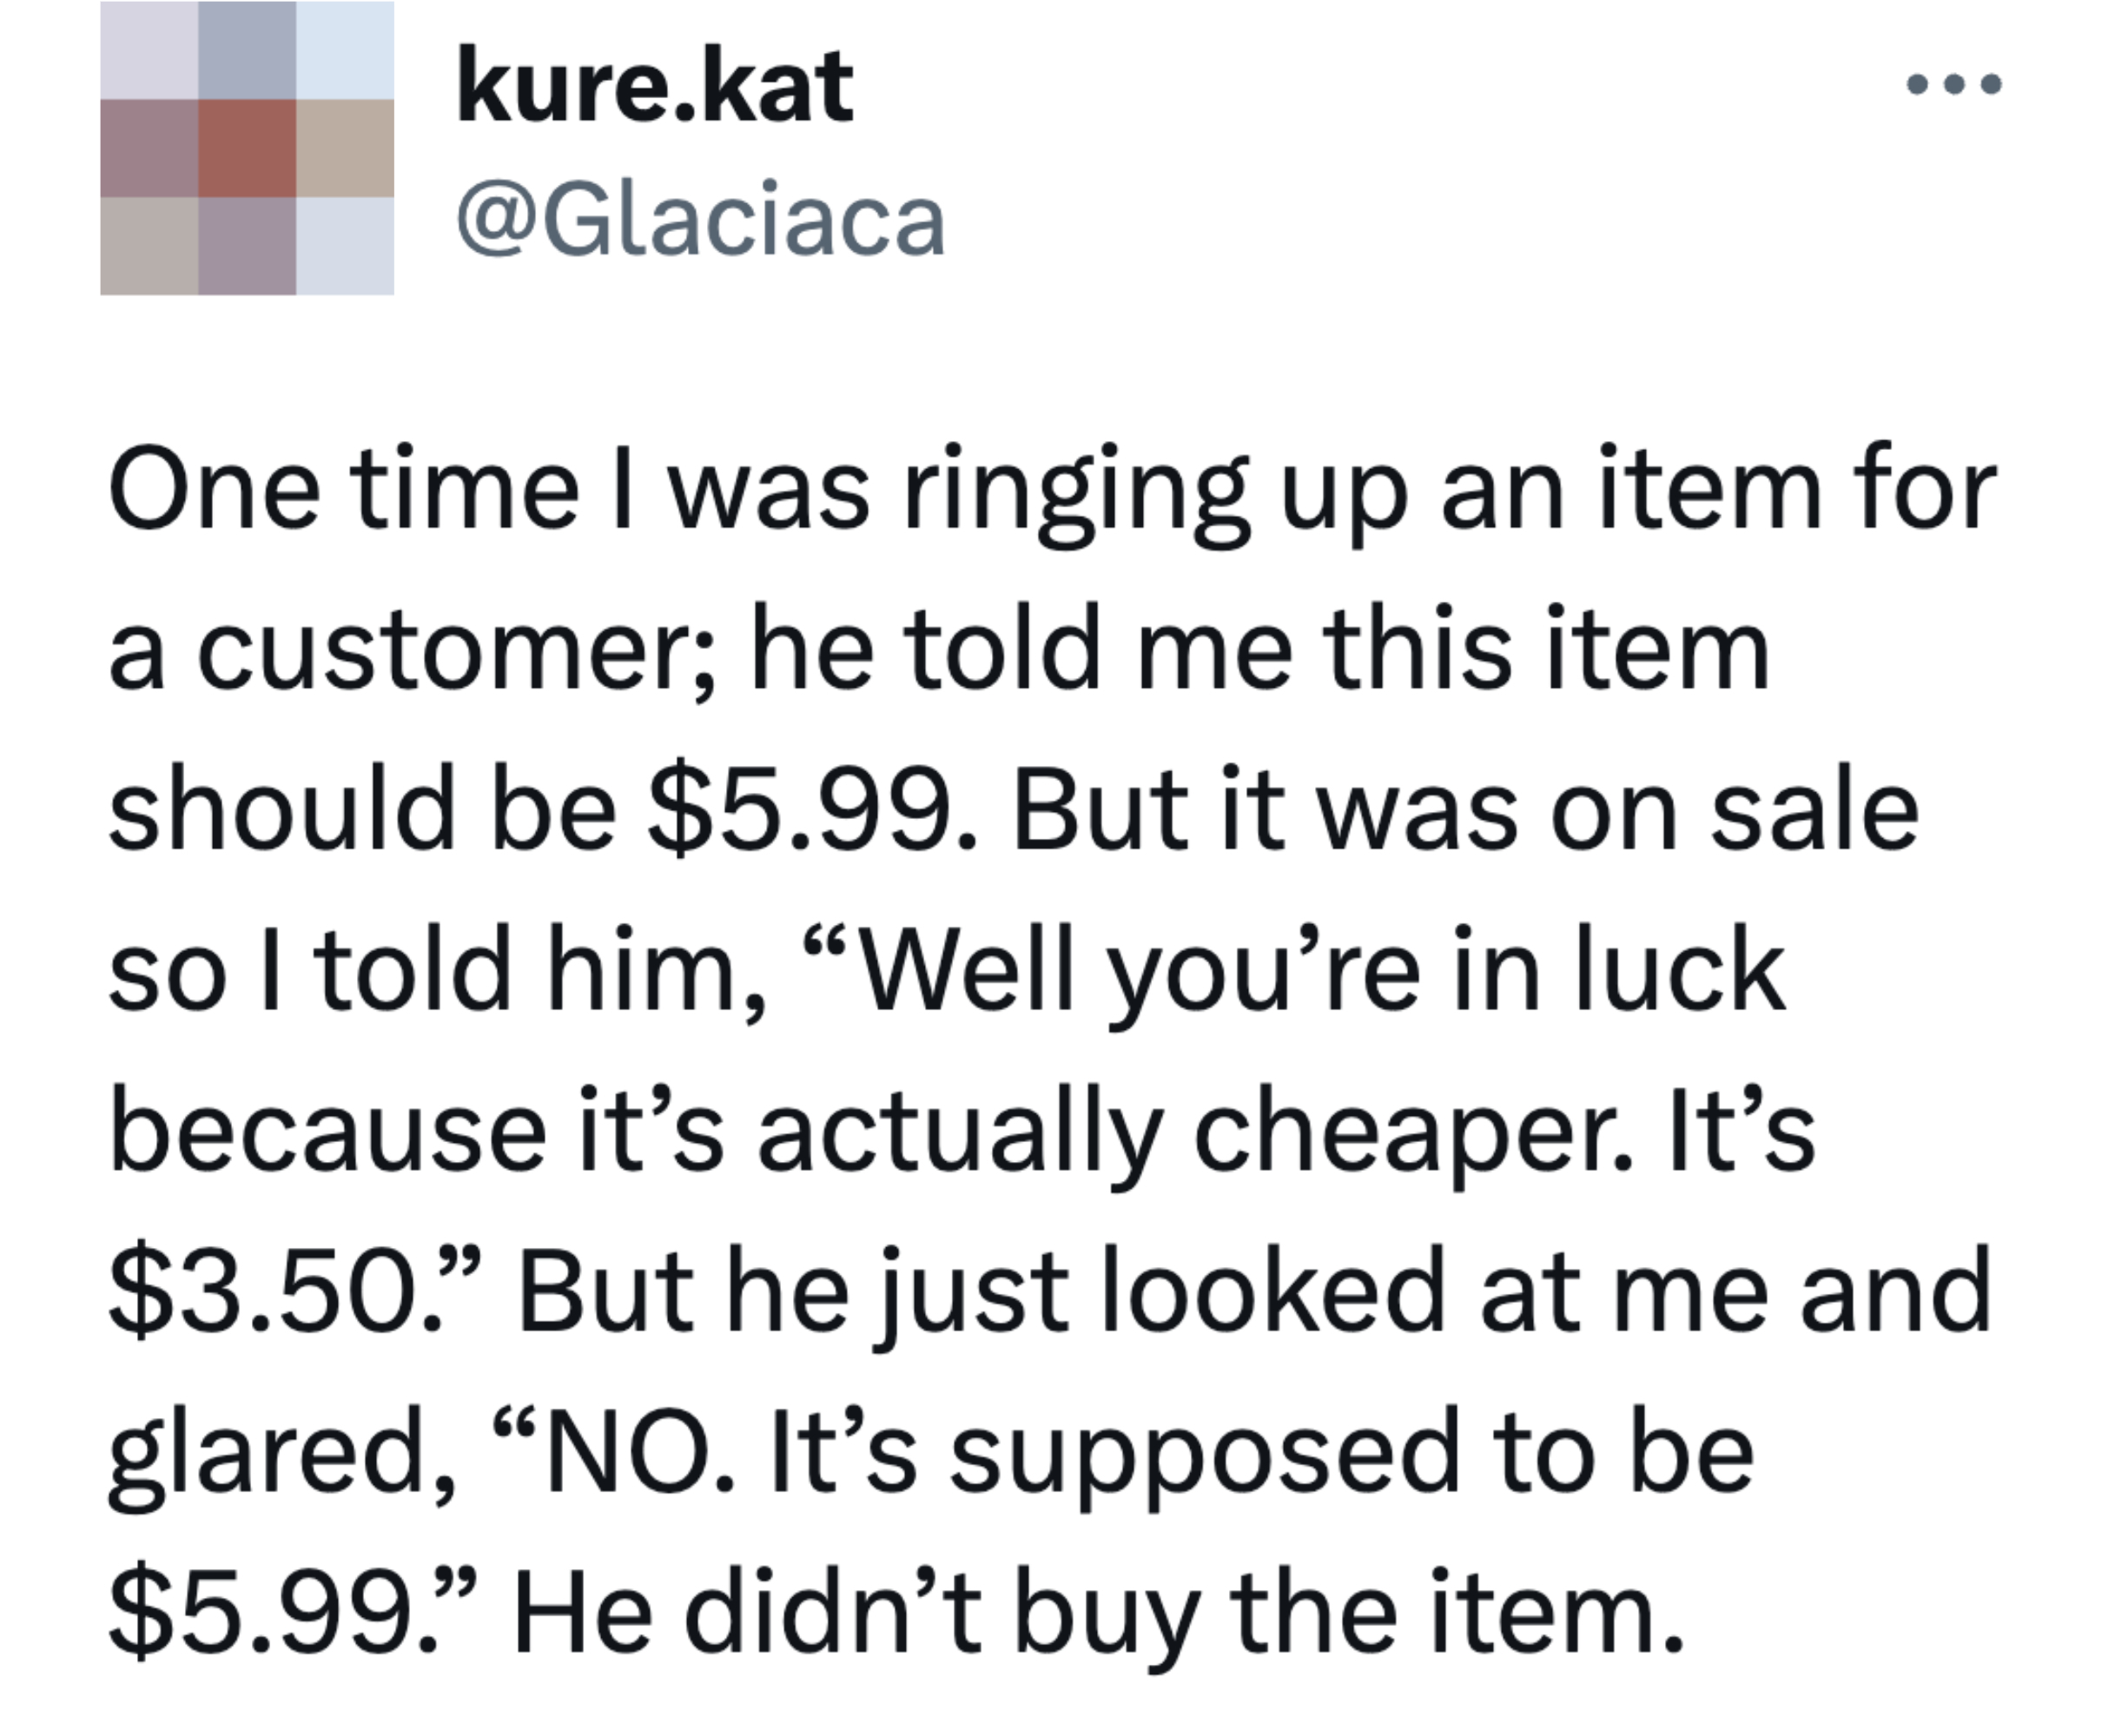 &quot;He didn&#x27;t buy the item.&quot;